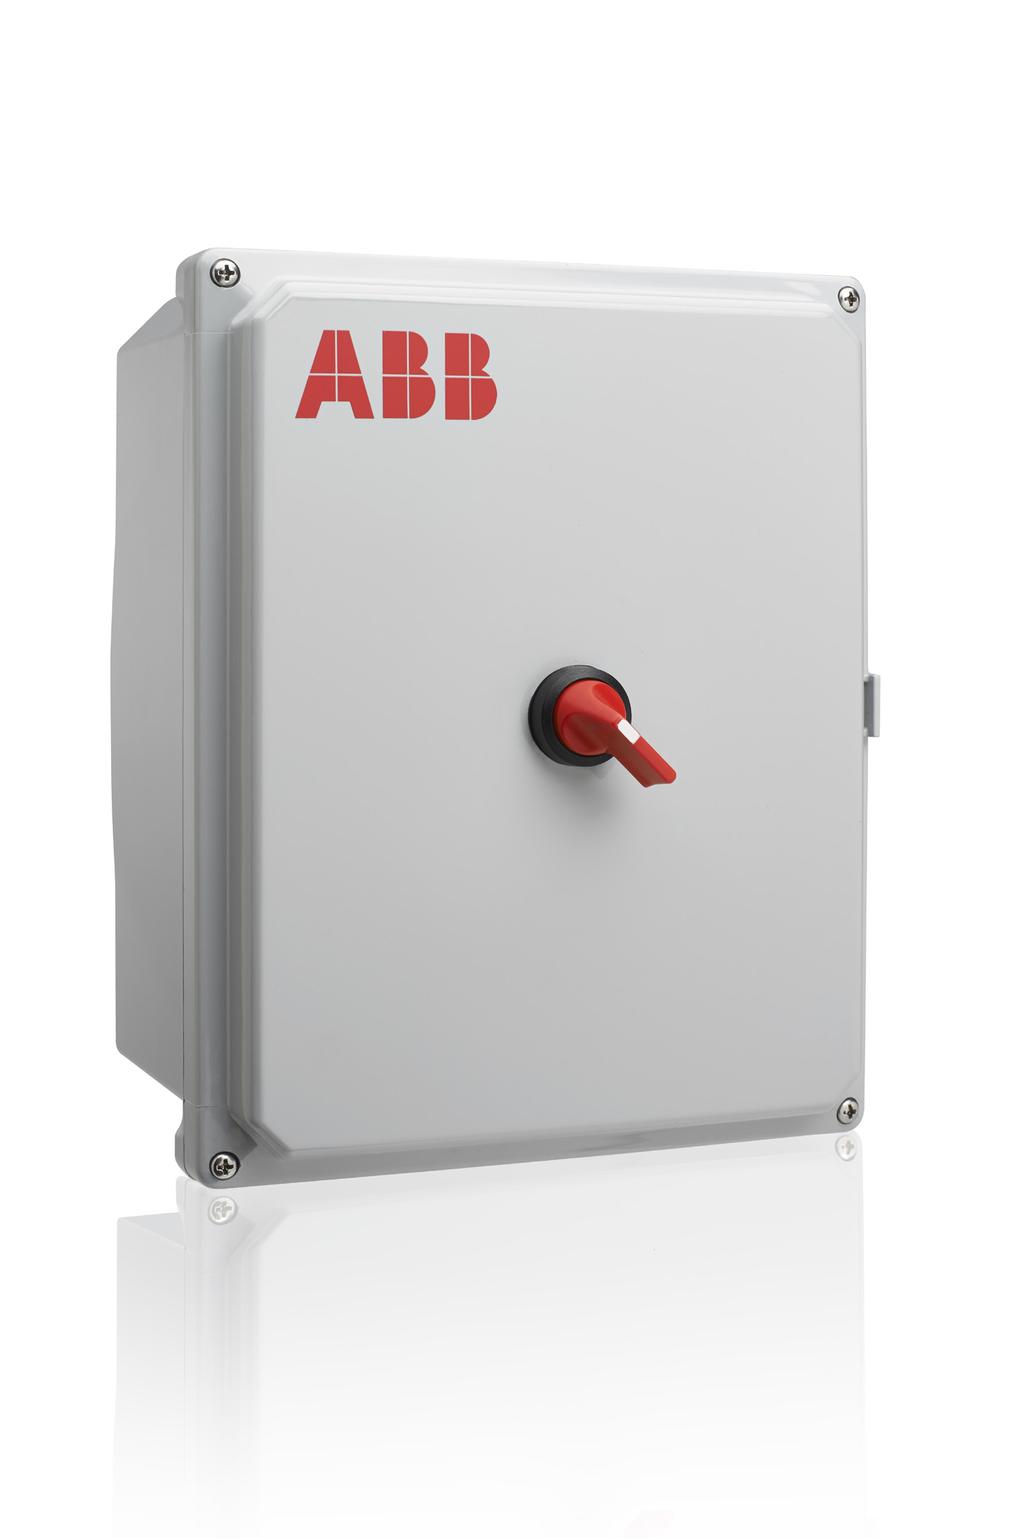 ABB solar inverters